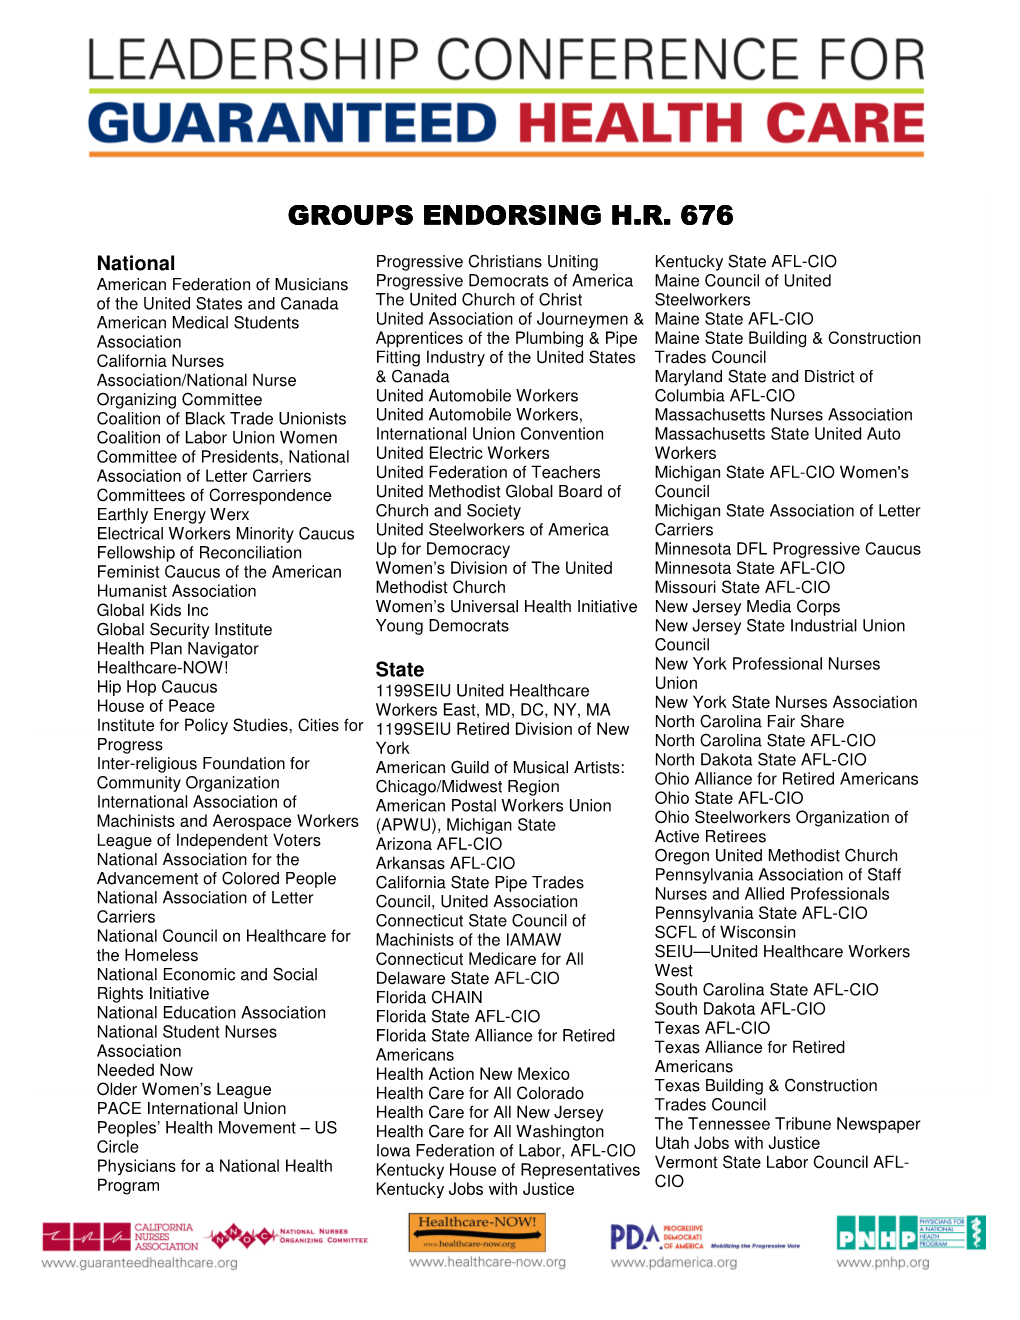 Groups Endorsing H.R. 676 Groups